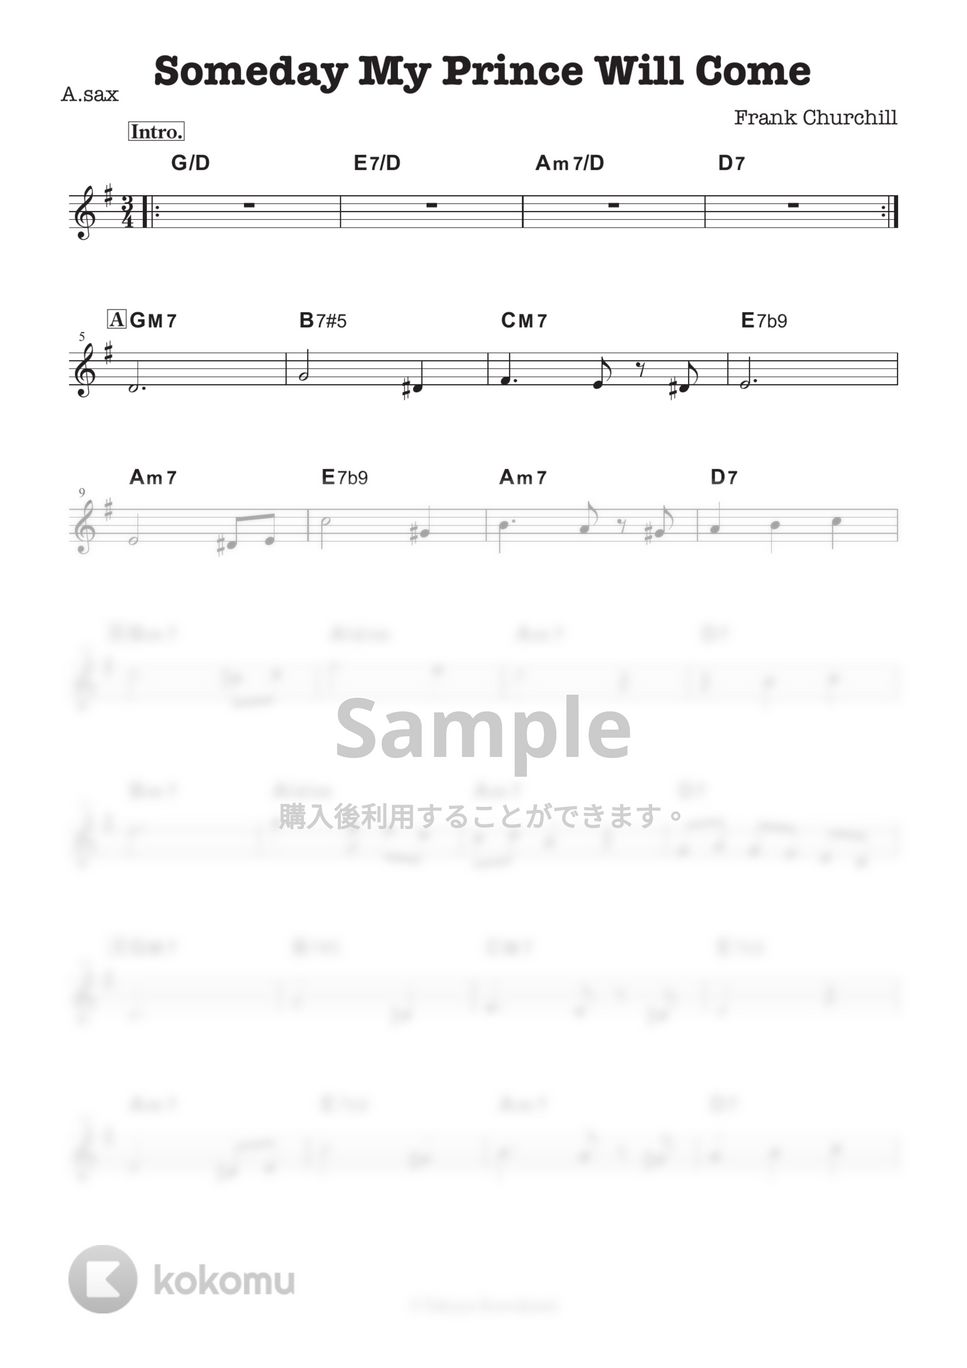 Frank Churchill - Someday My Prince Will Come (サックス / Jazz / アドリブ) by TAKUYA KAWAKAMI